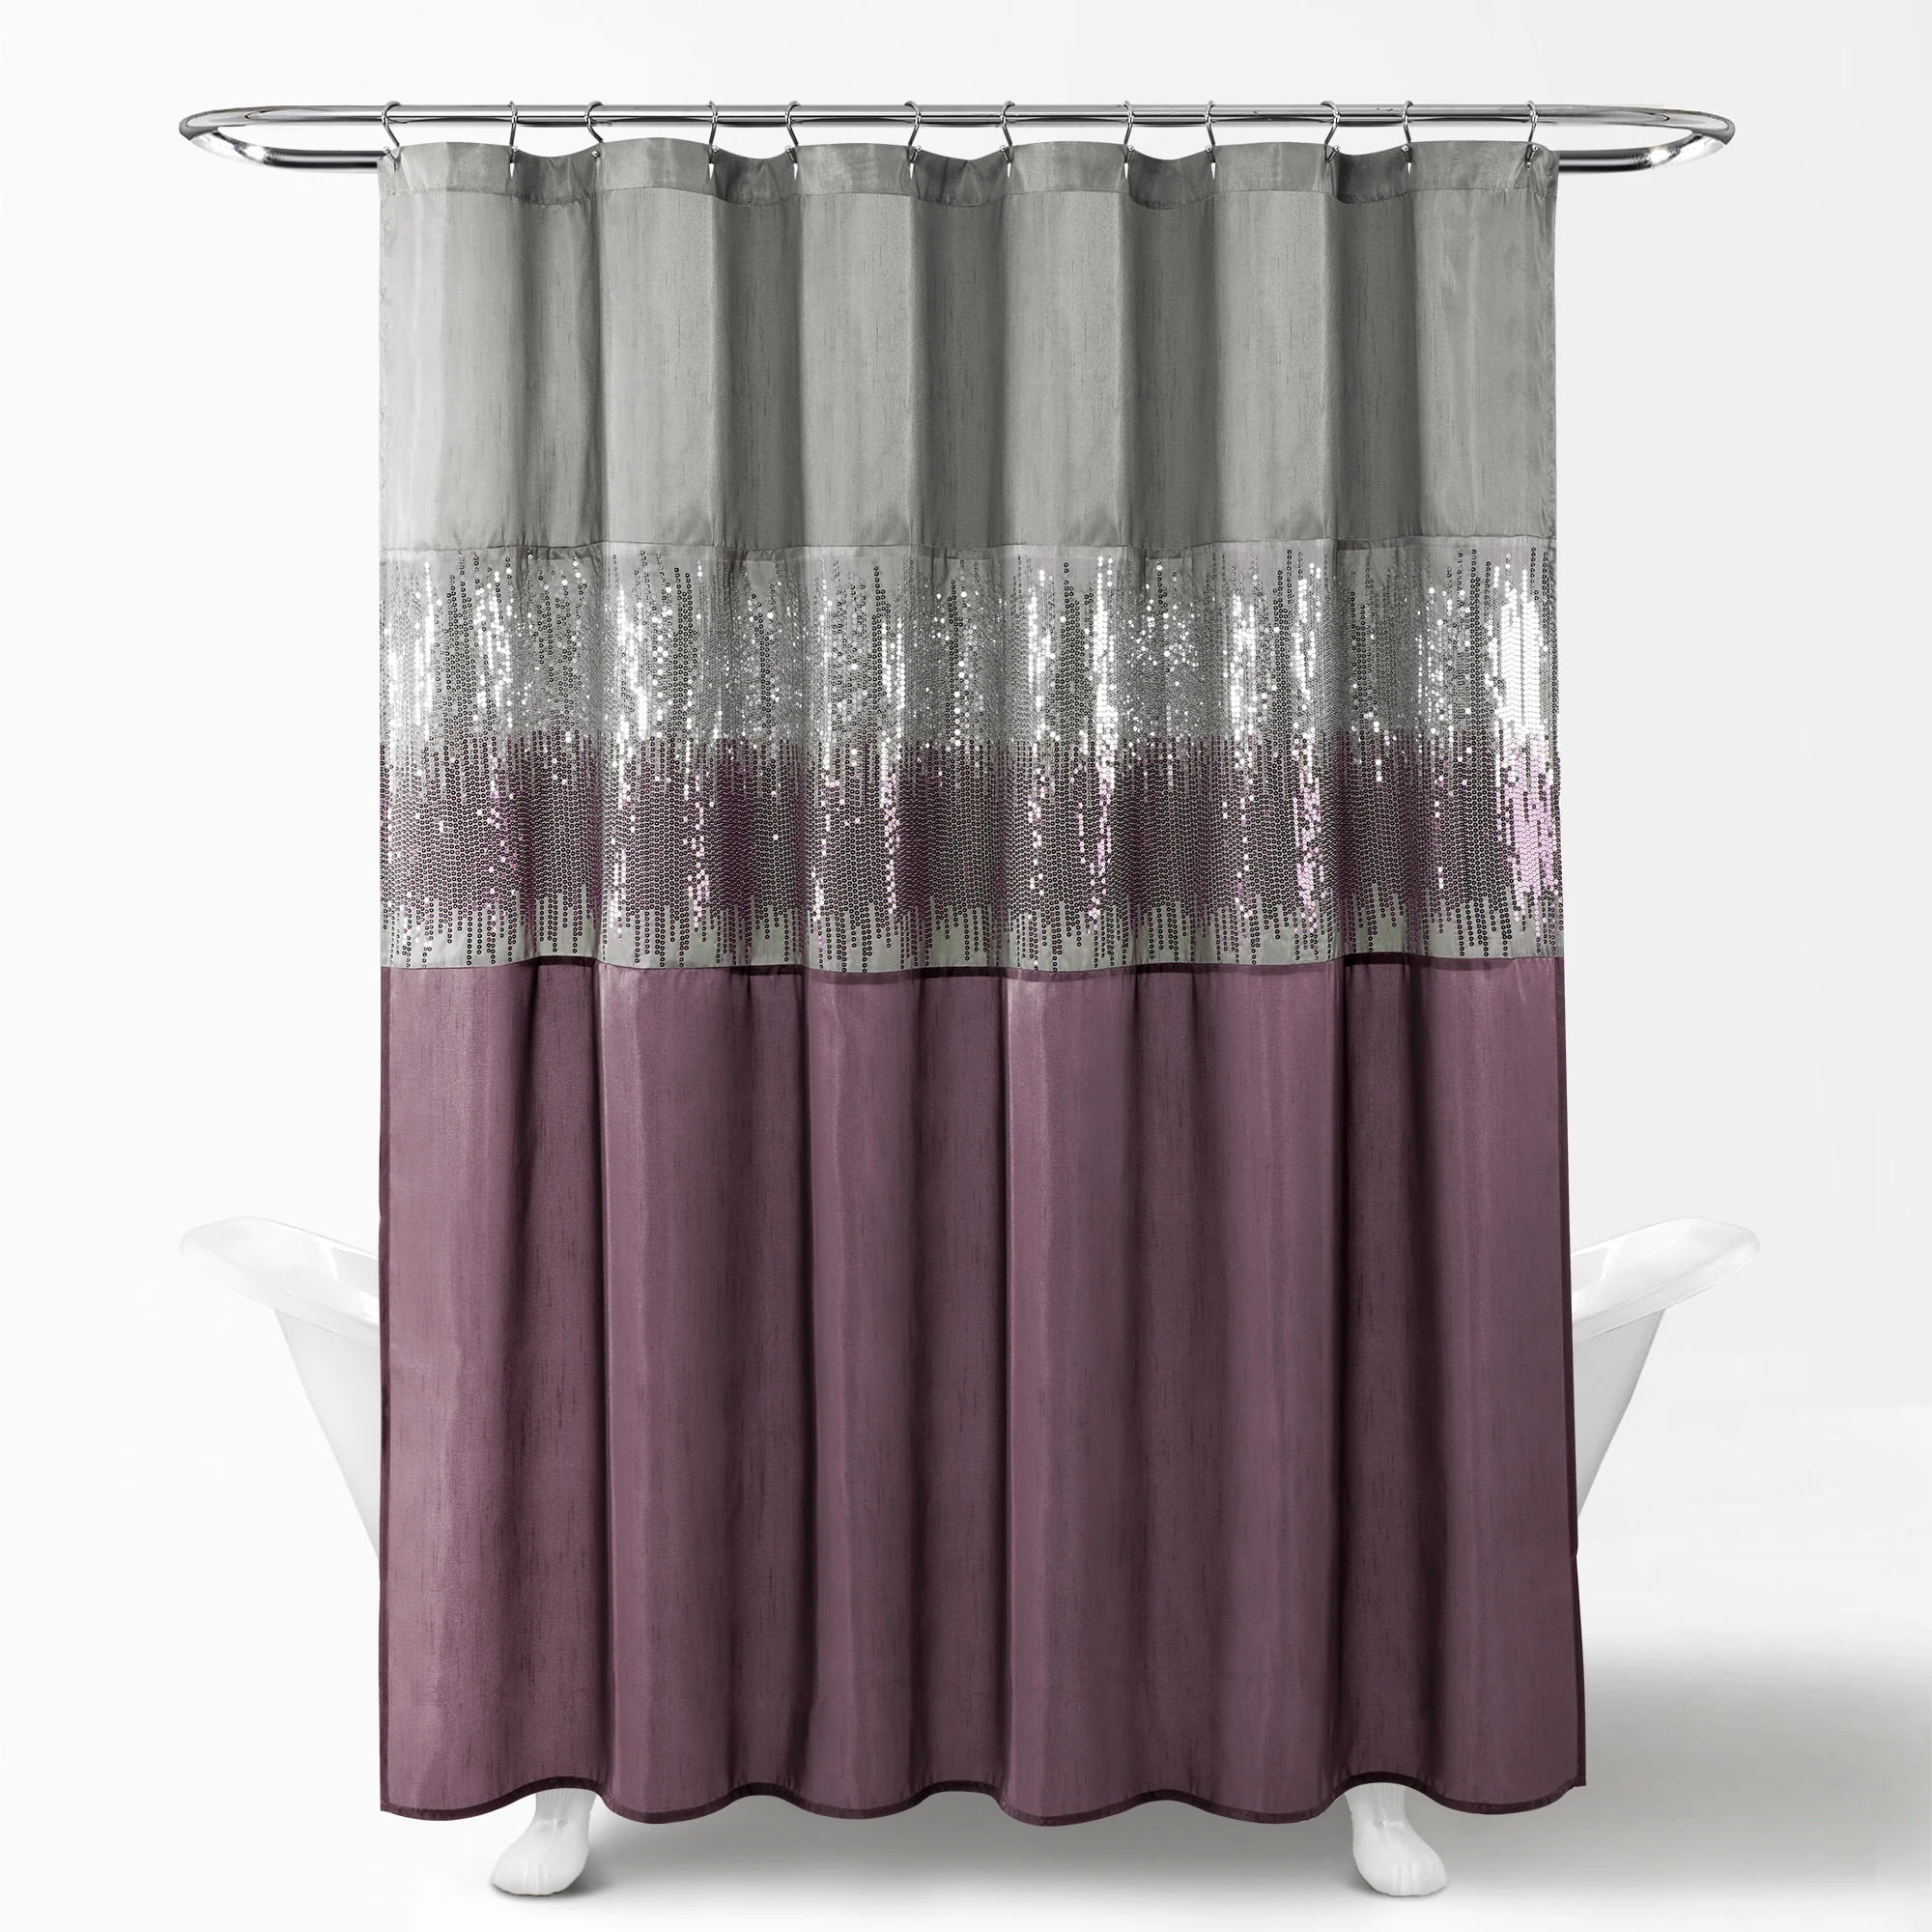 Lush Decor Night Sky Sequins Shower Curtain 72x72 Black White Single Com